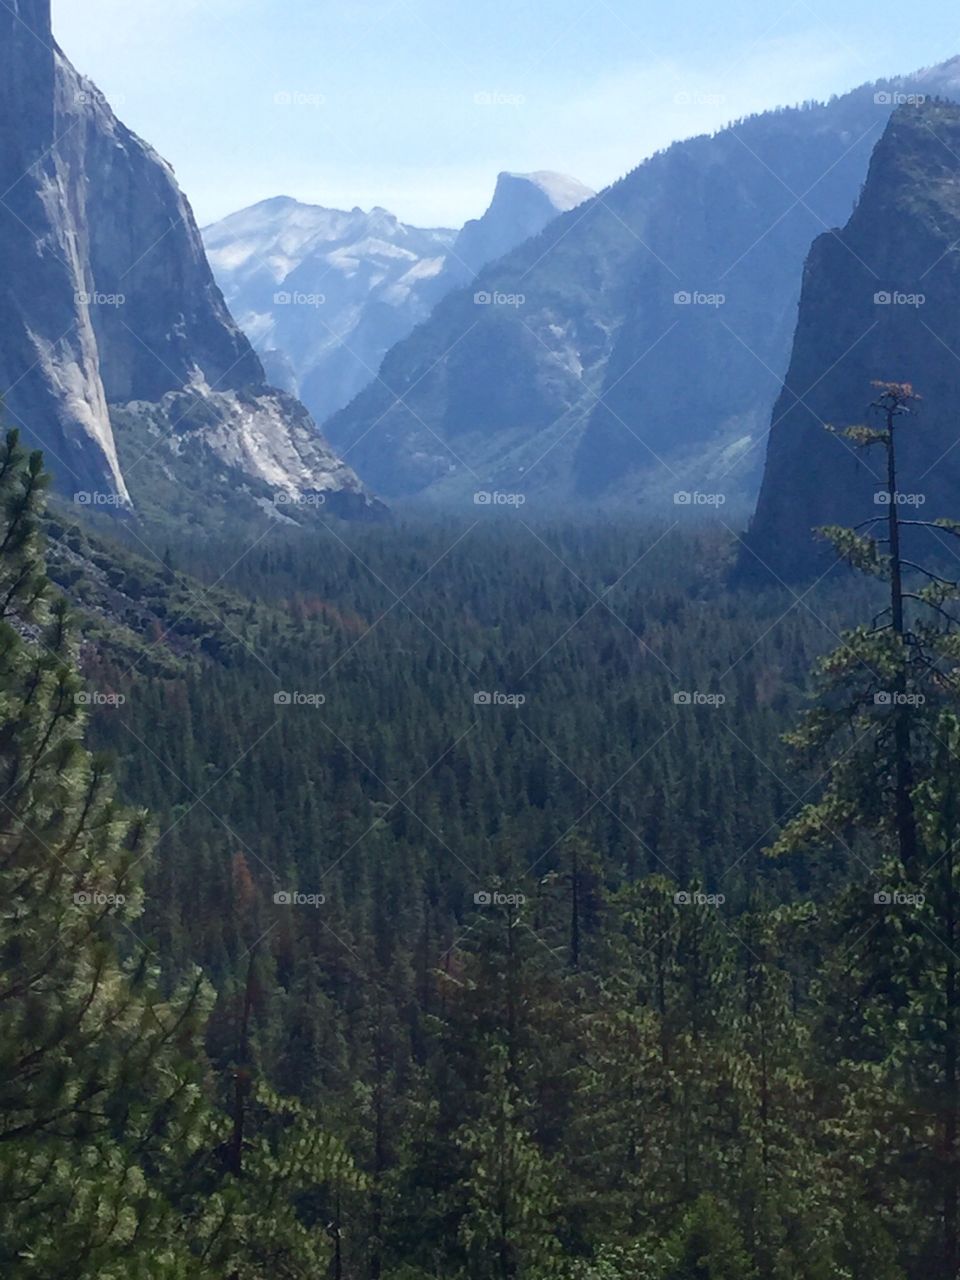 Yosemite Valley
National Park